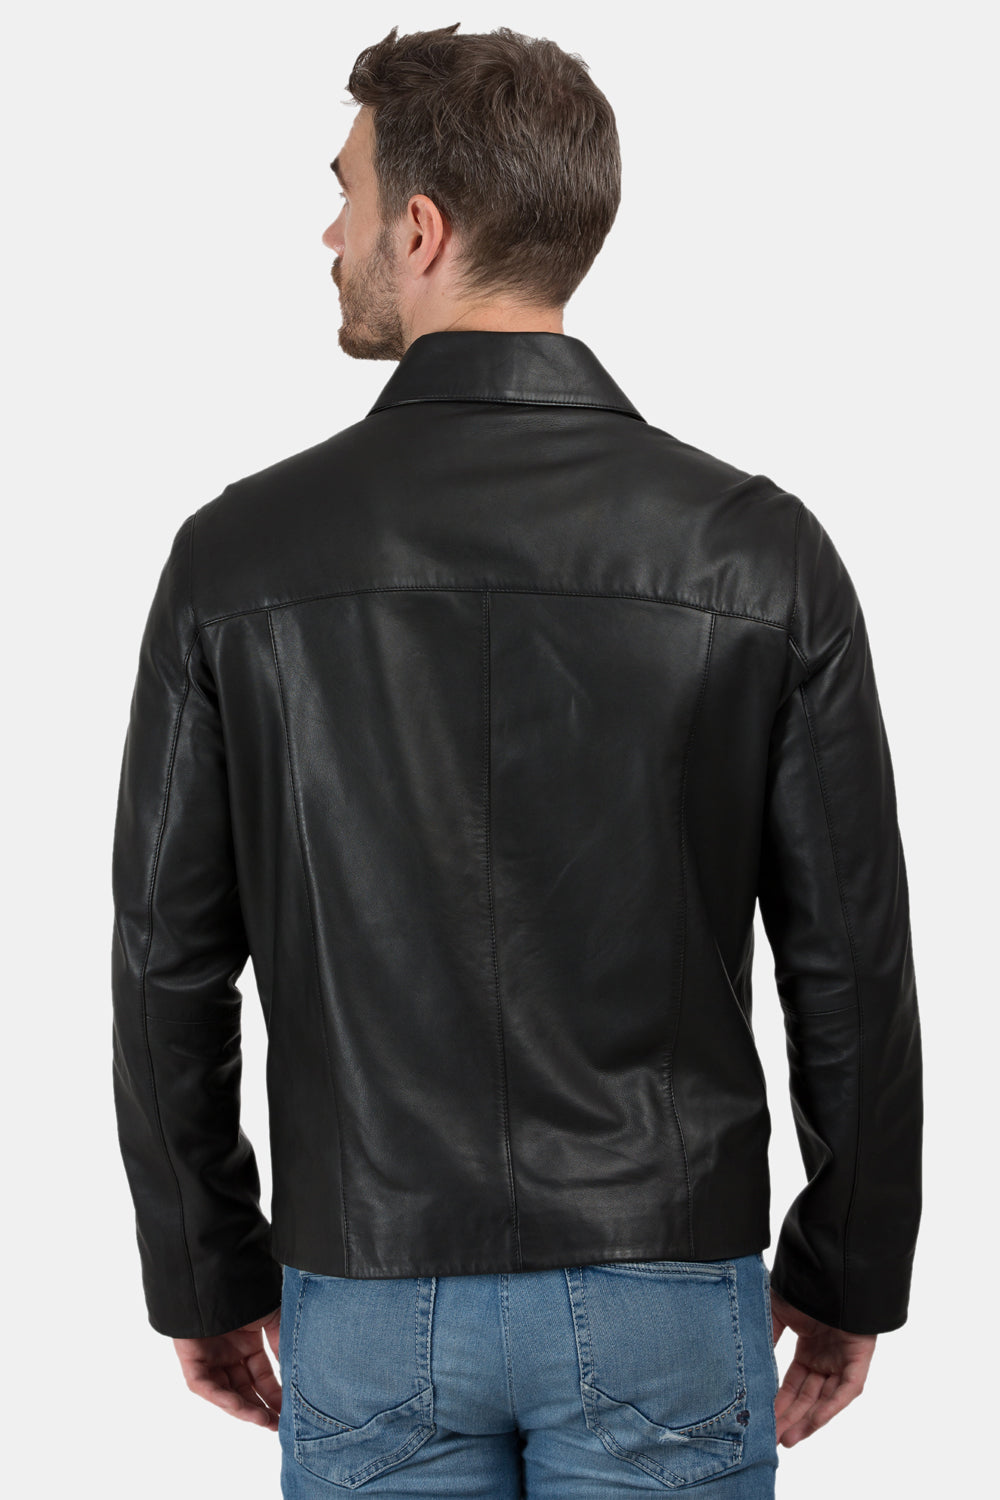 Justanned Distress Leather Denim Jacket M